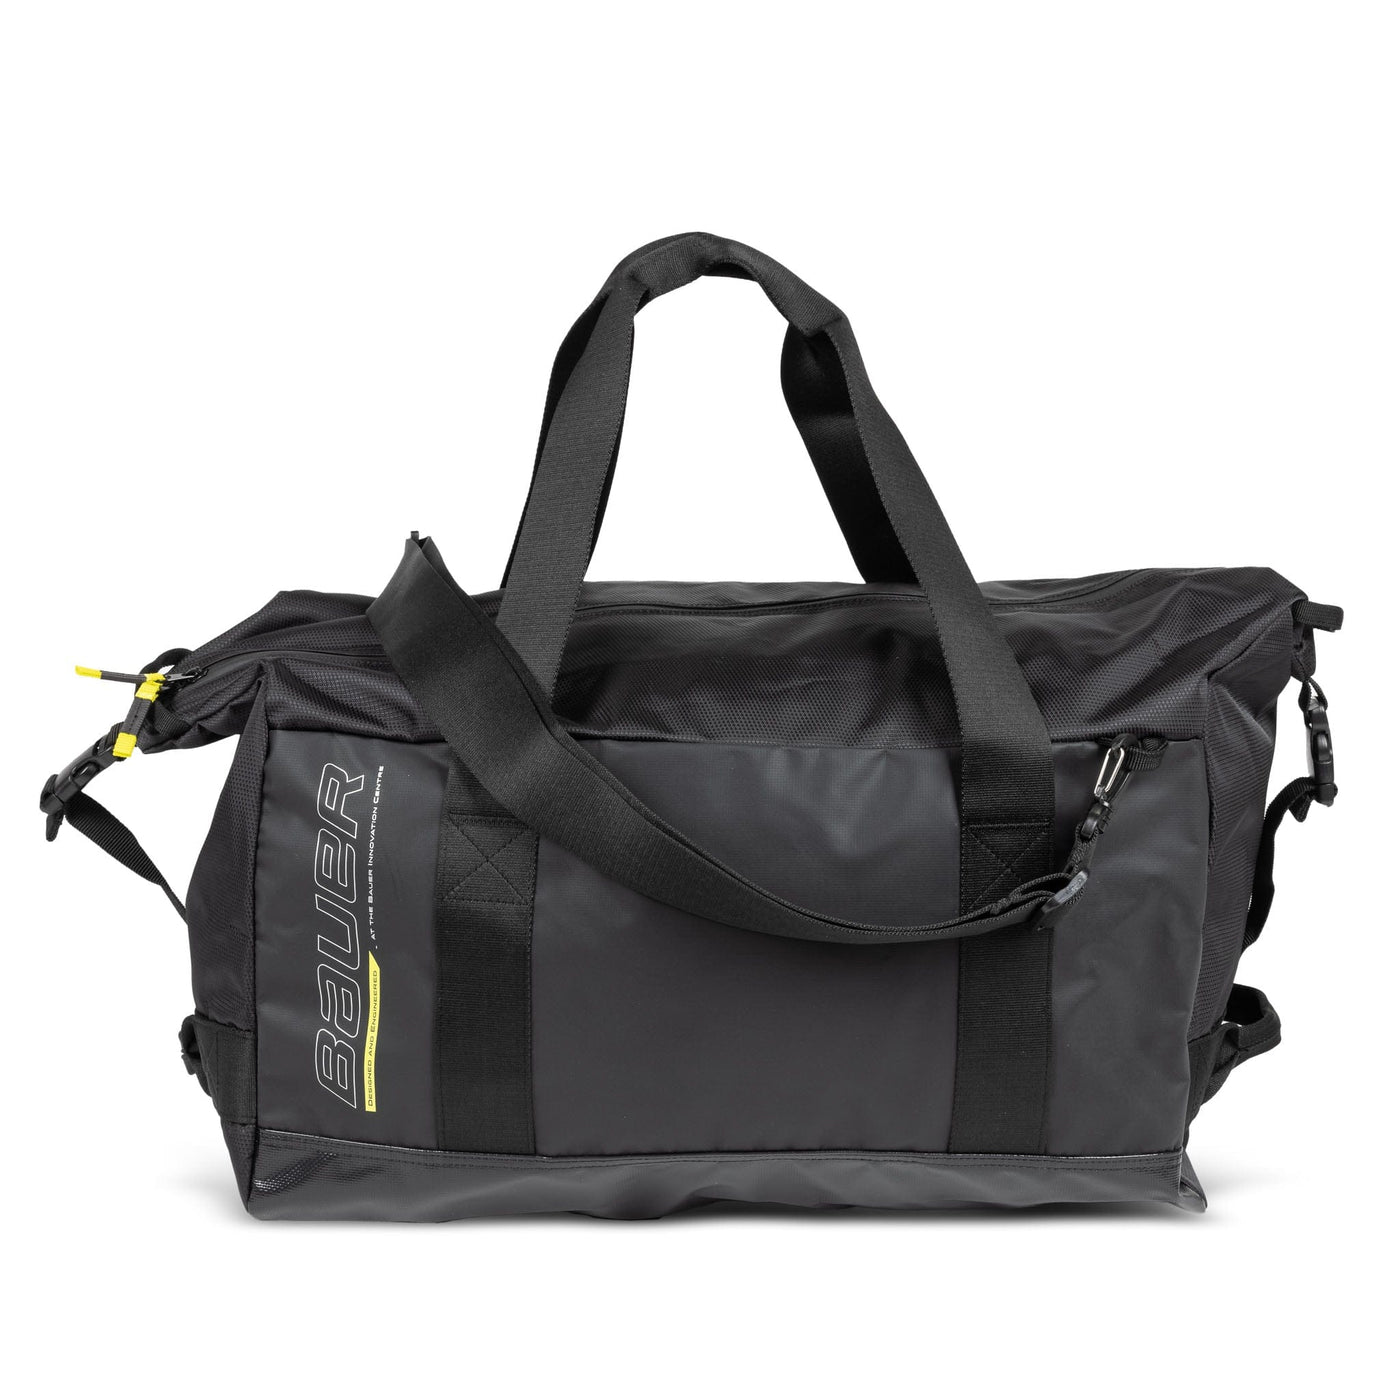 Bauer Elite Duffle Bag